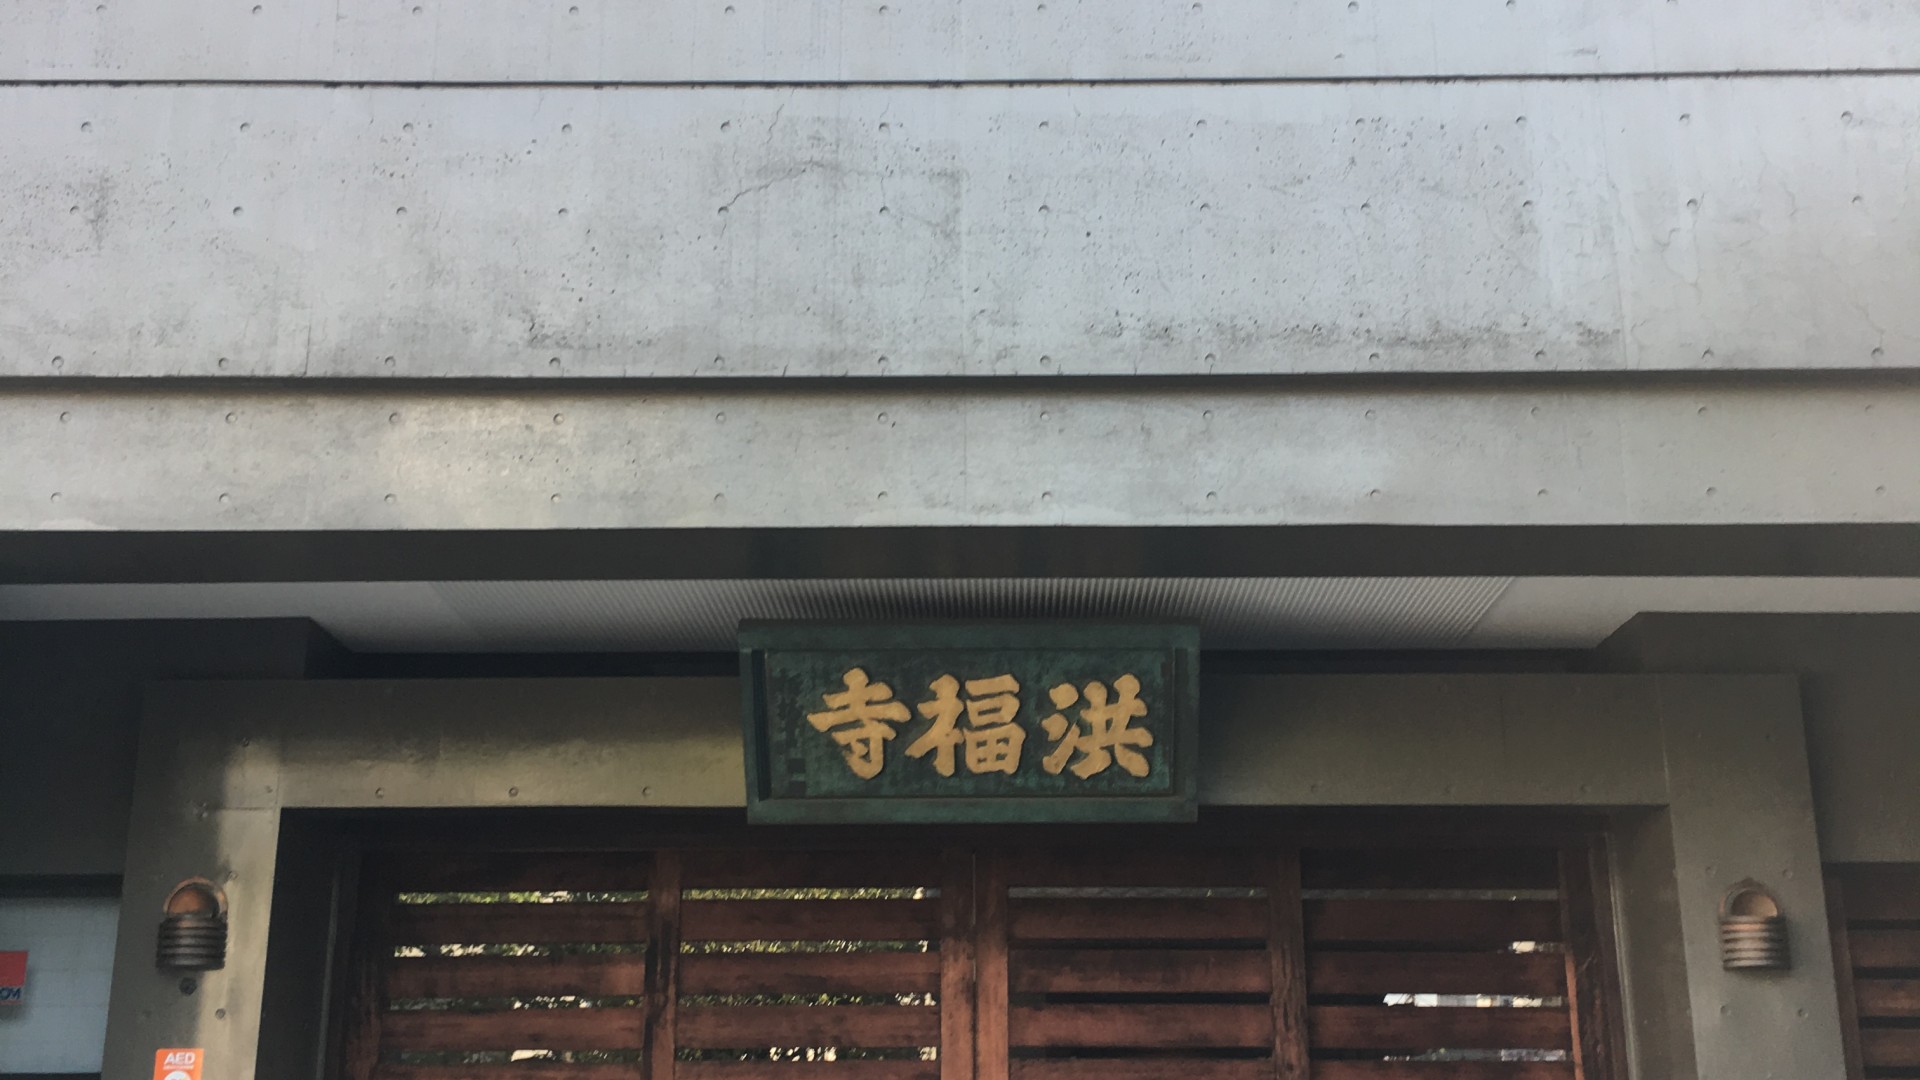 Kofuku ji temple